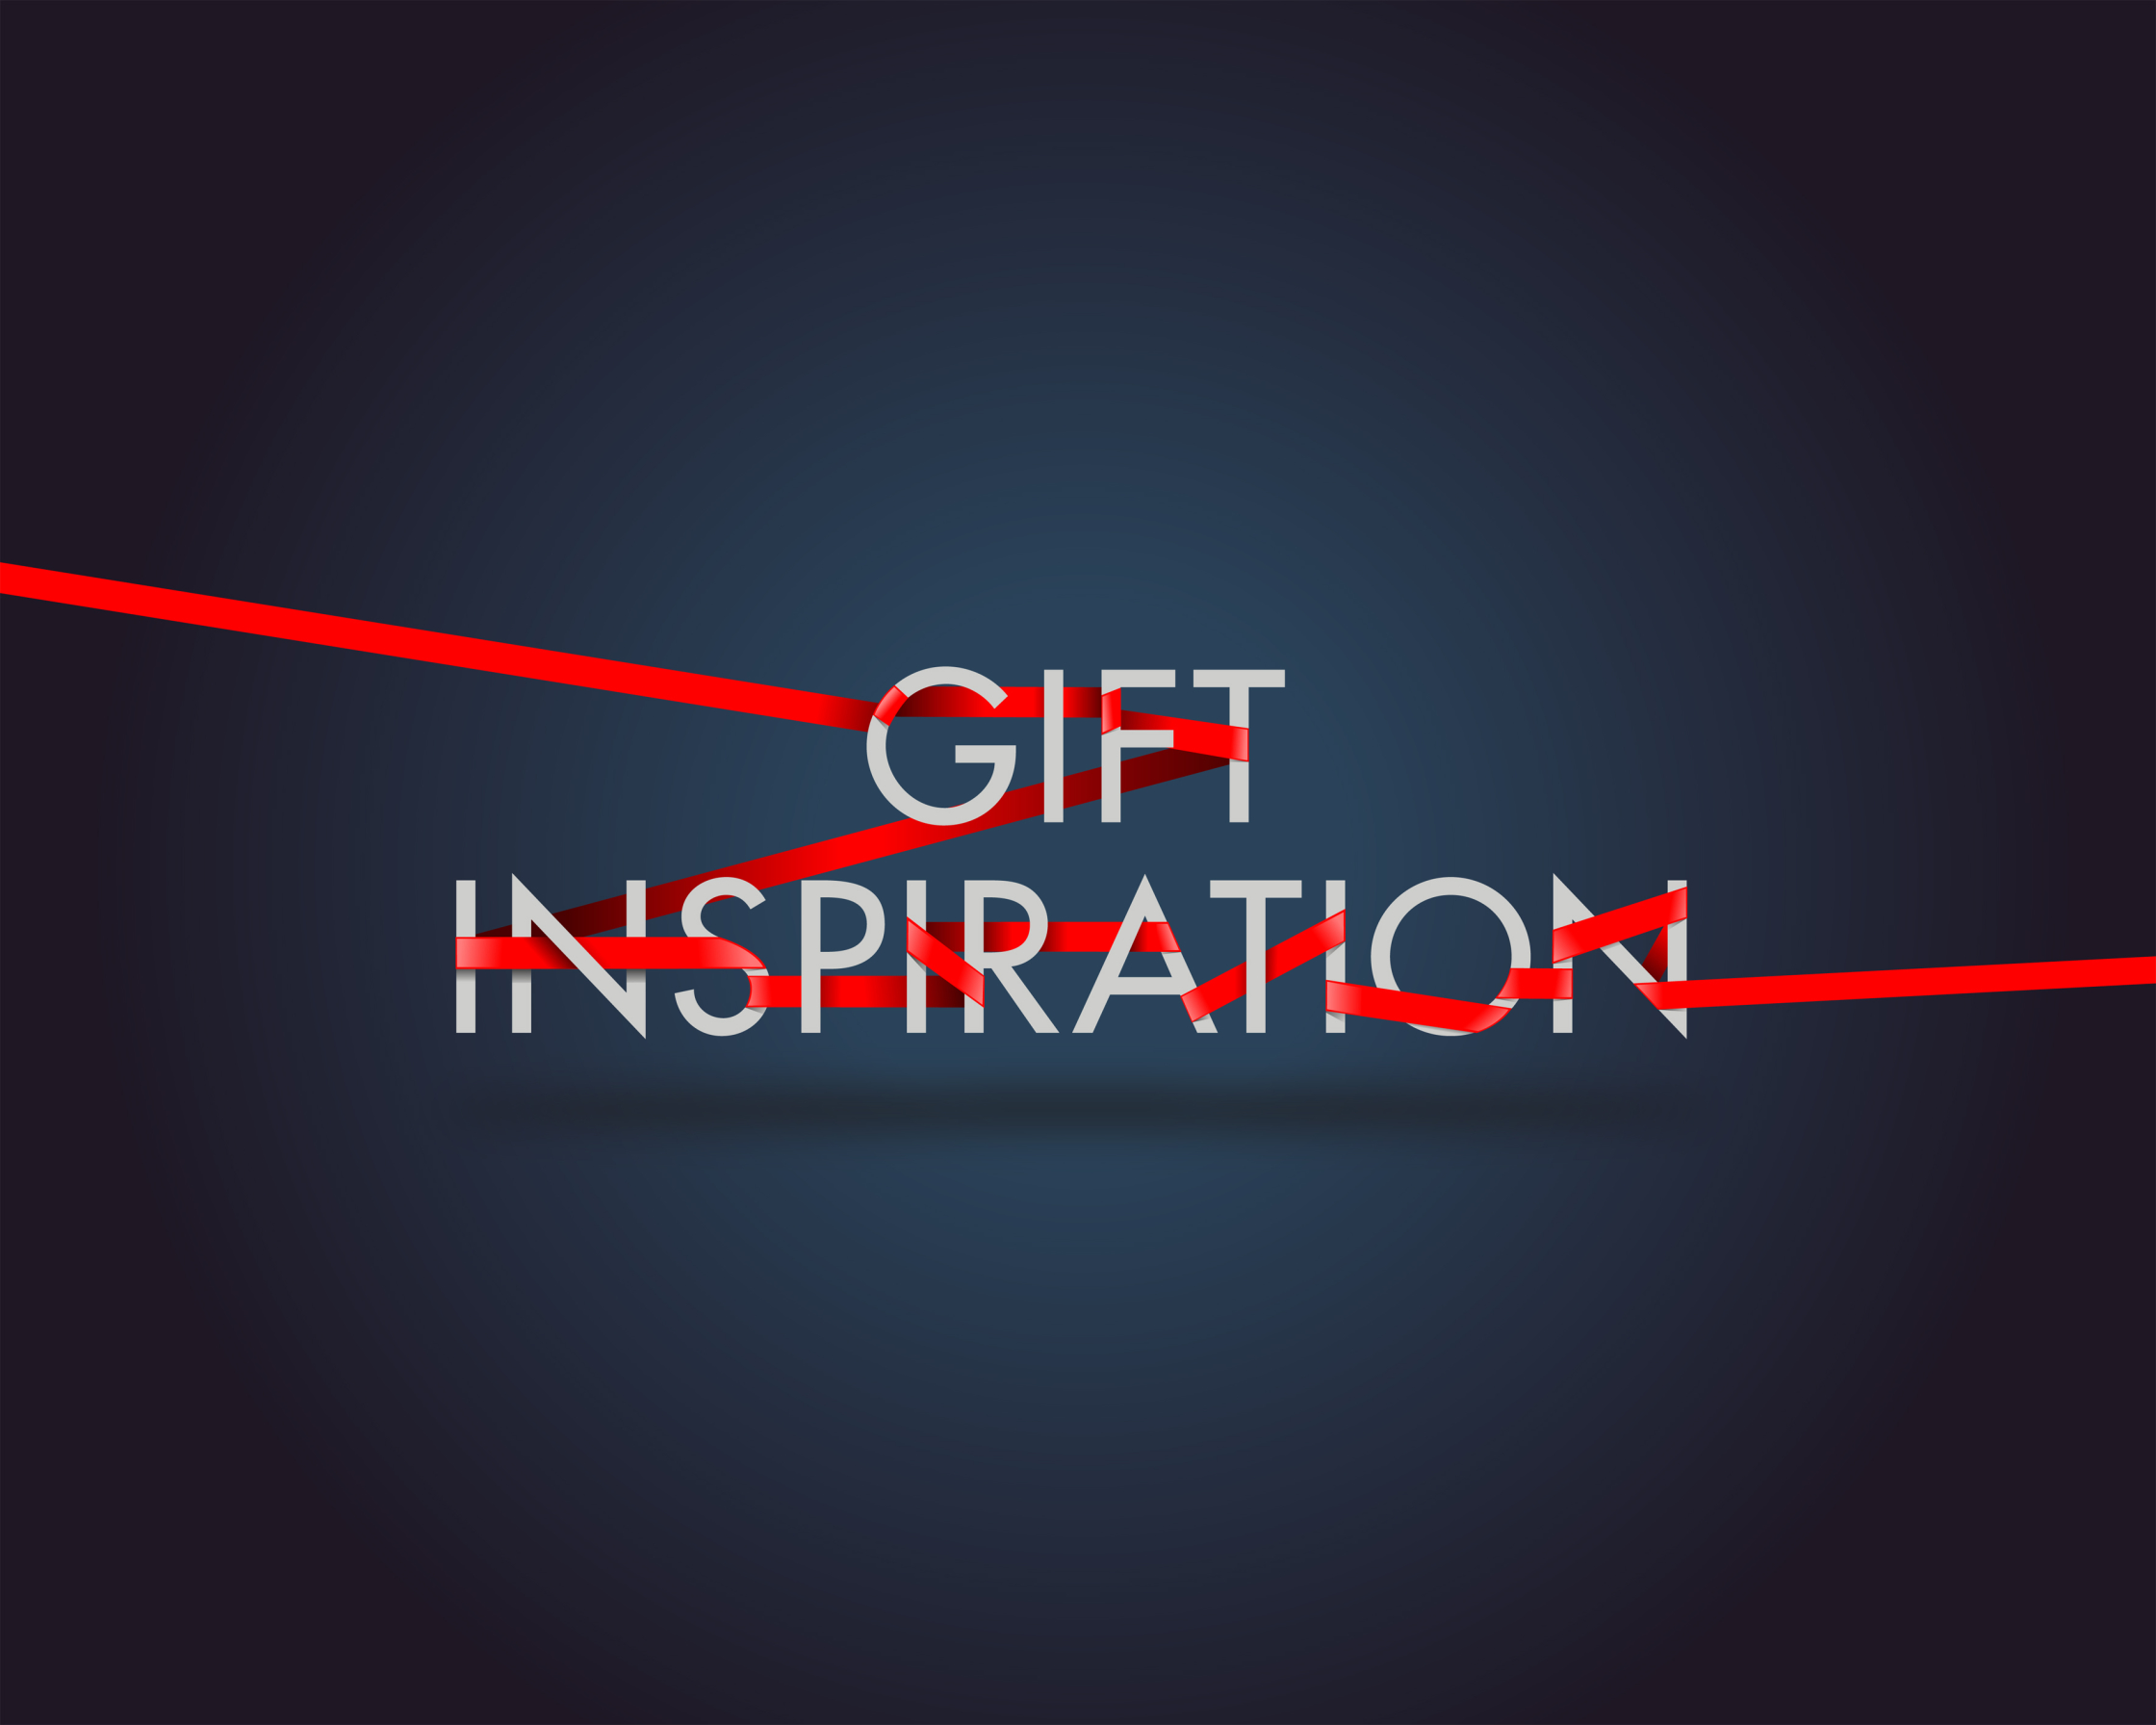 Gift Inspiration